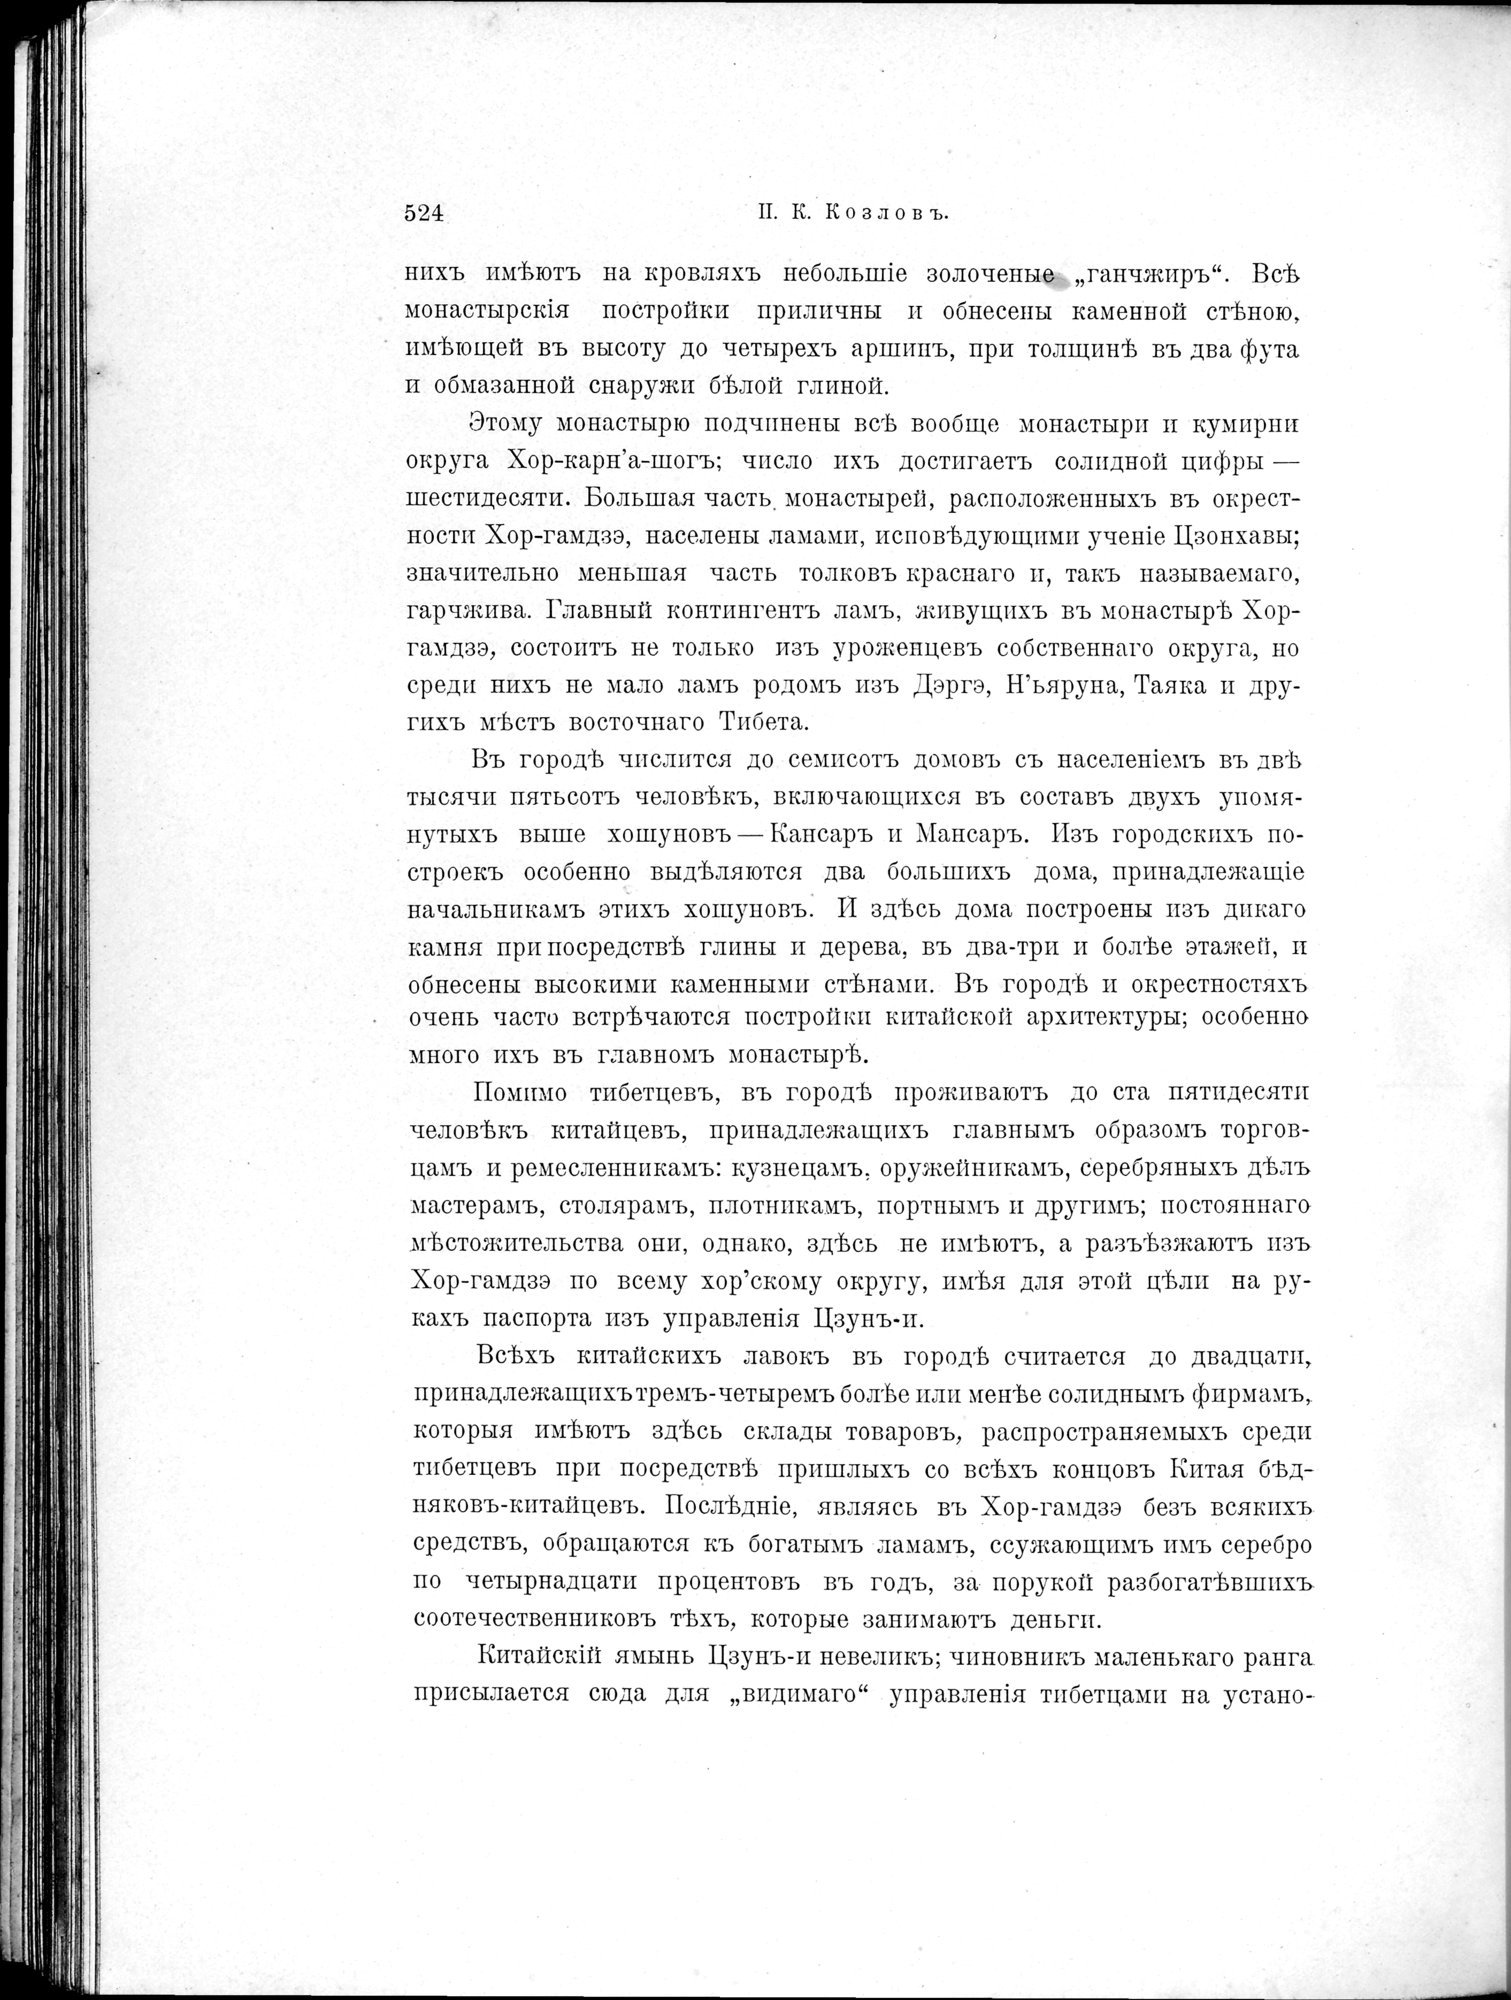 Mongoliia i Kam : vol.2 / Page 342 (Grayscale High Resolution Image)